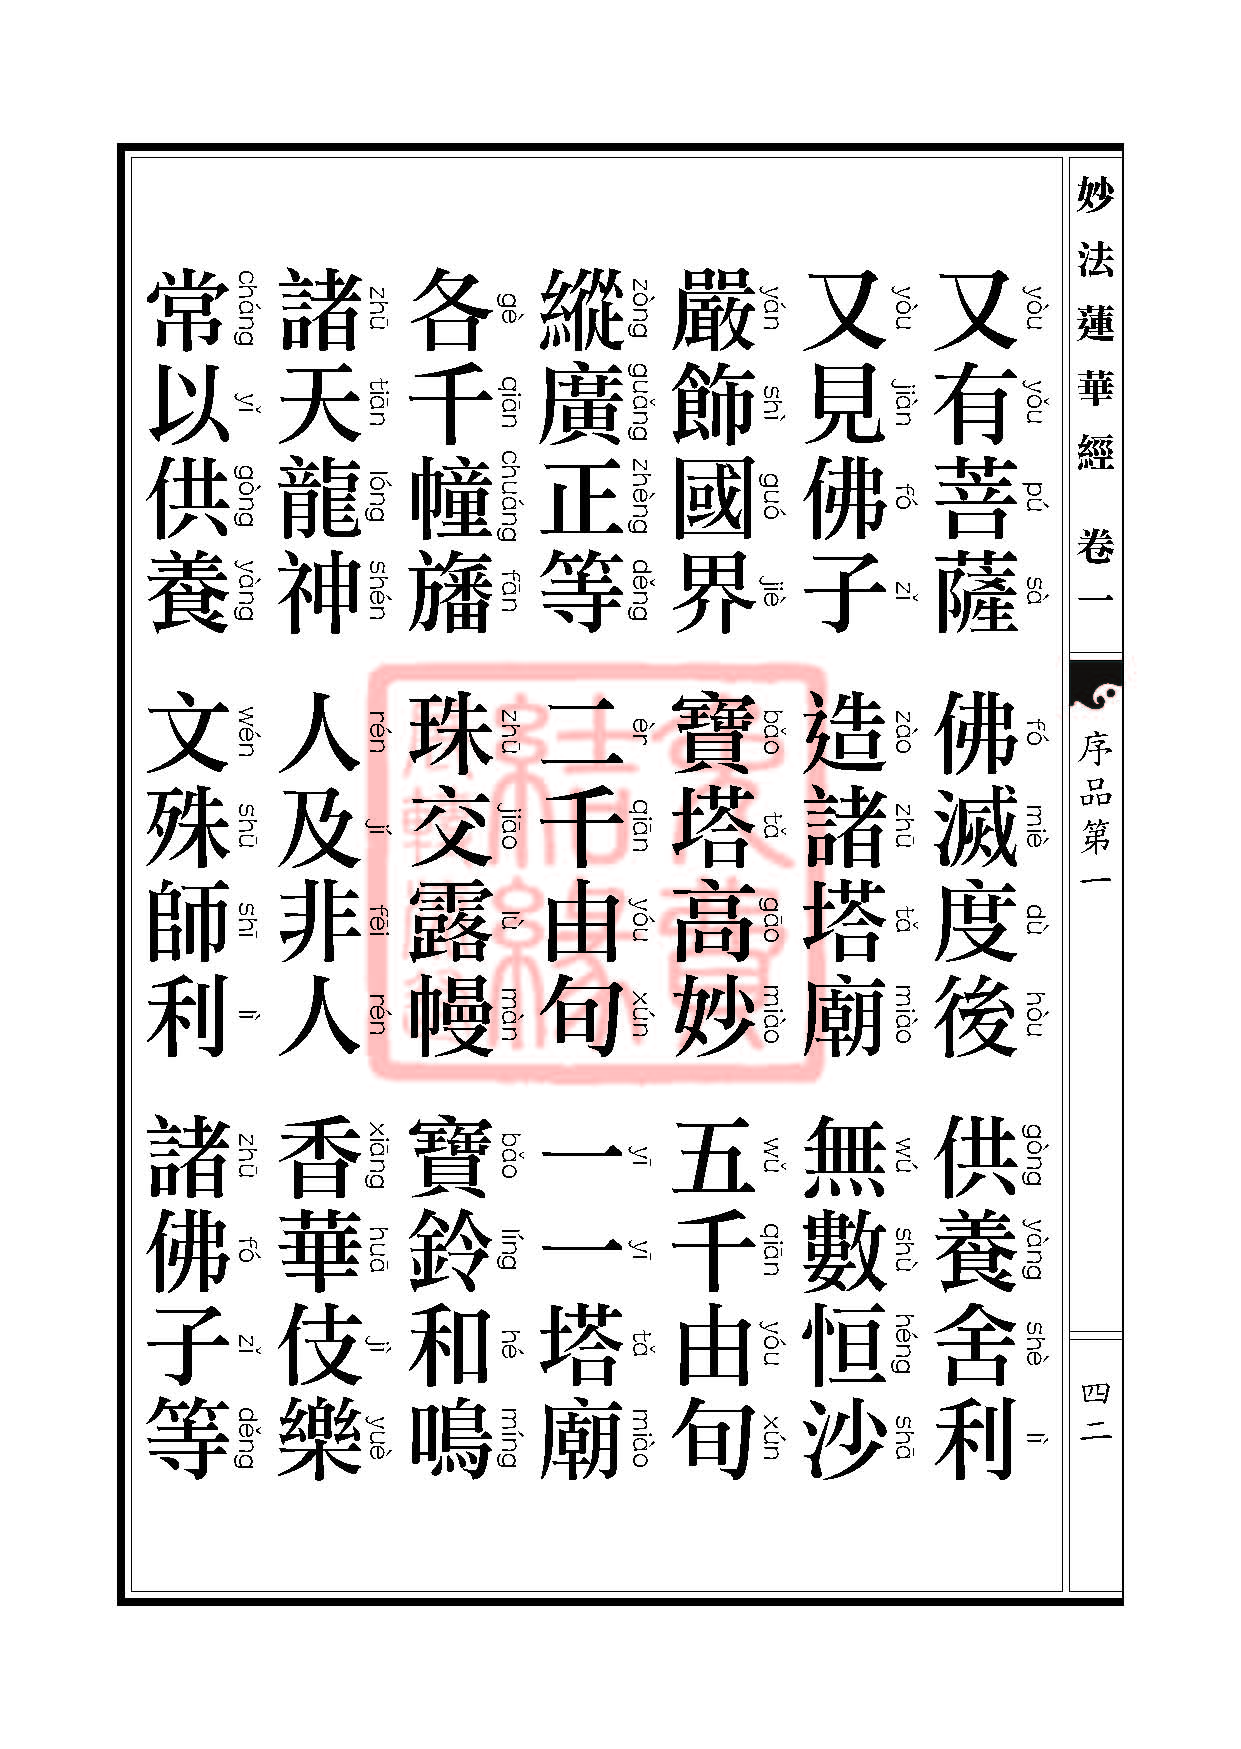 Book_FHJ_HK-A6-PY_Web_页面_042.jpg